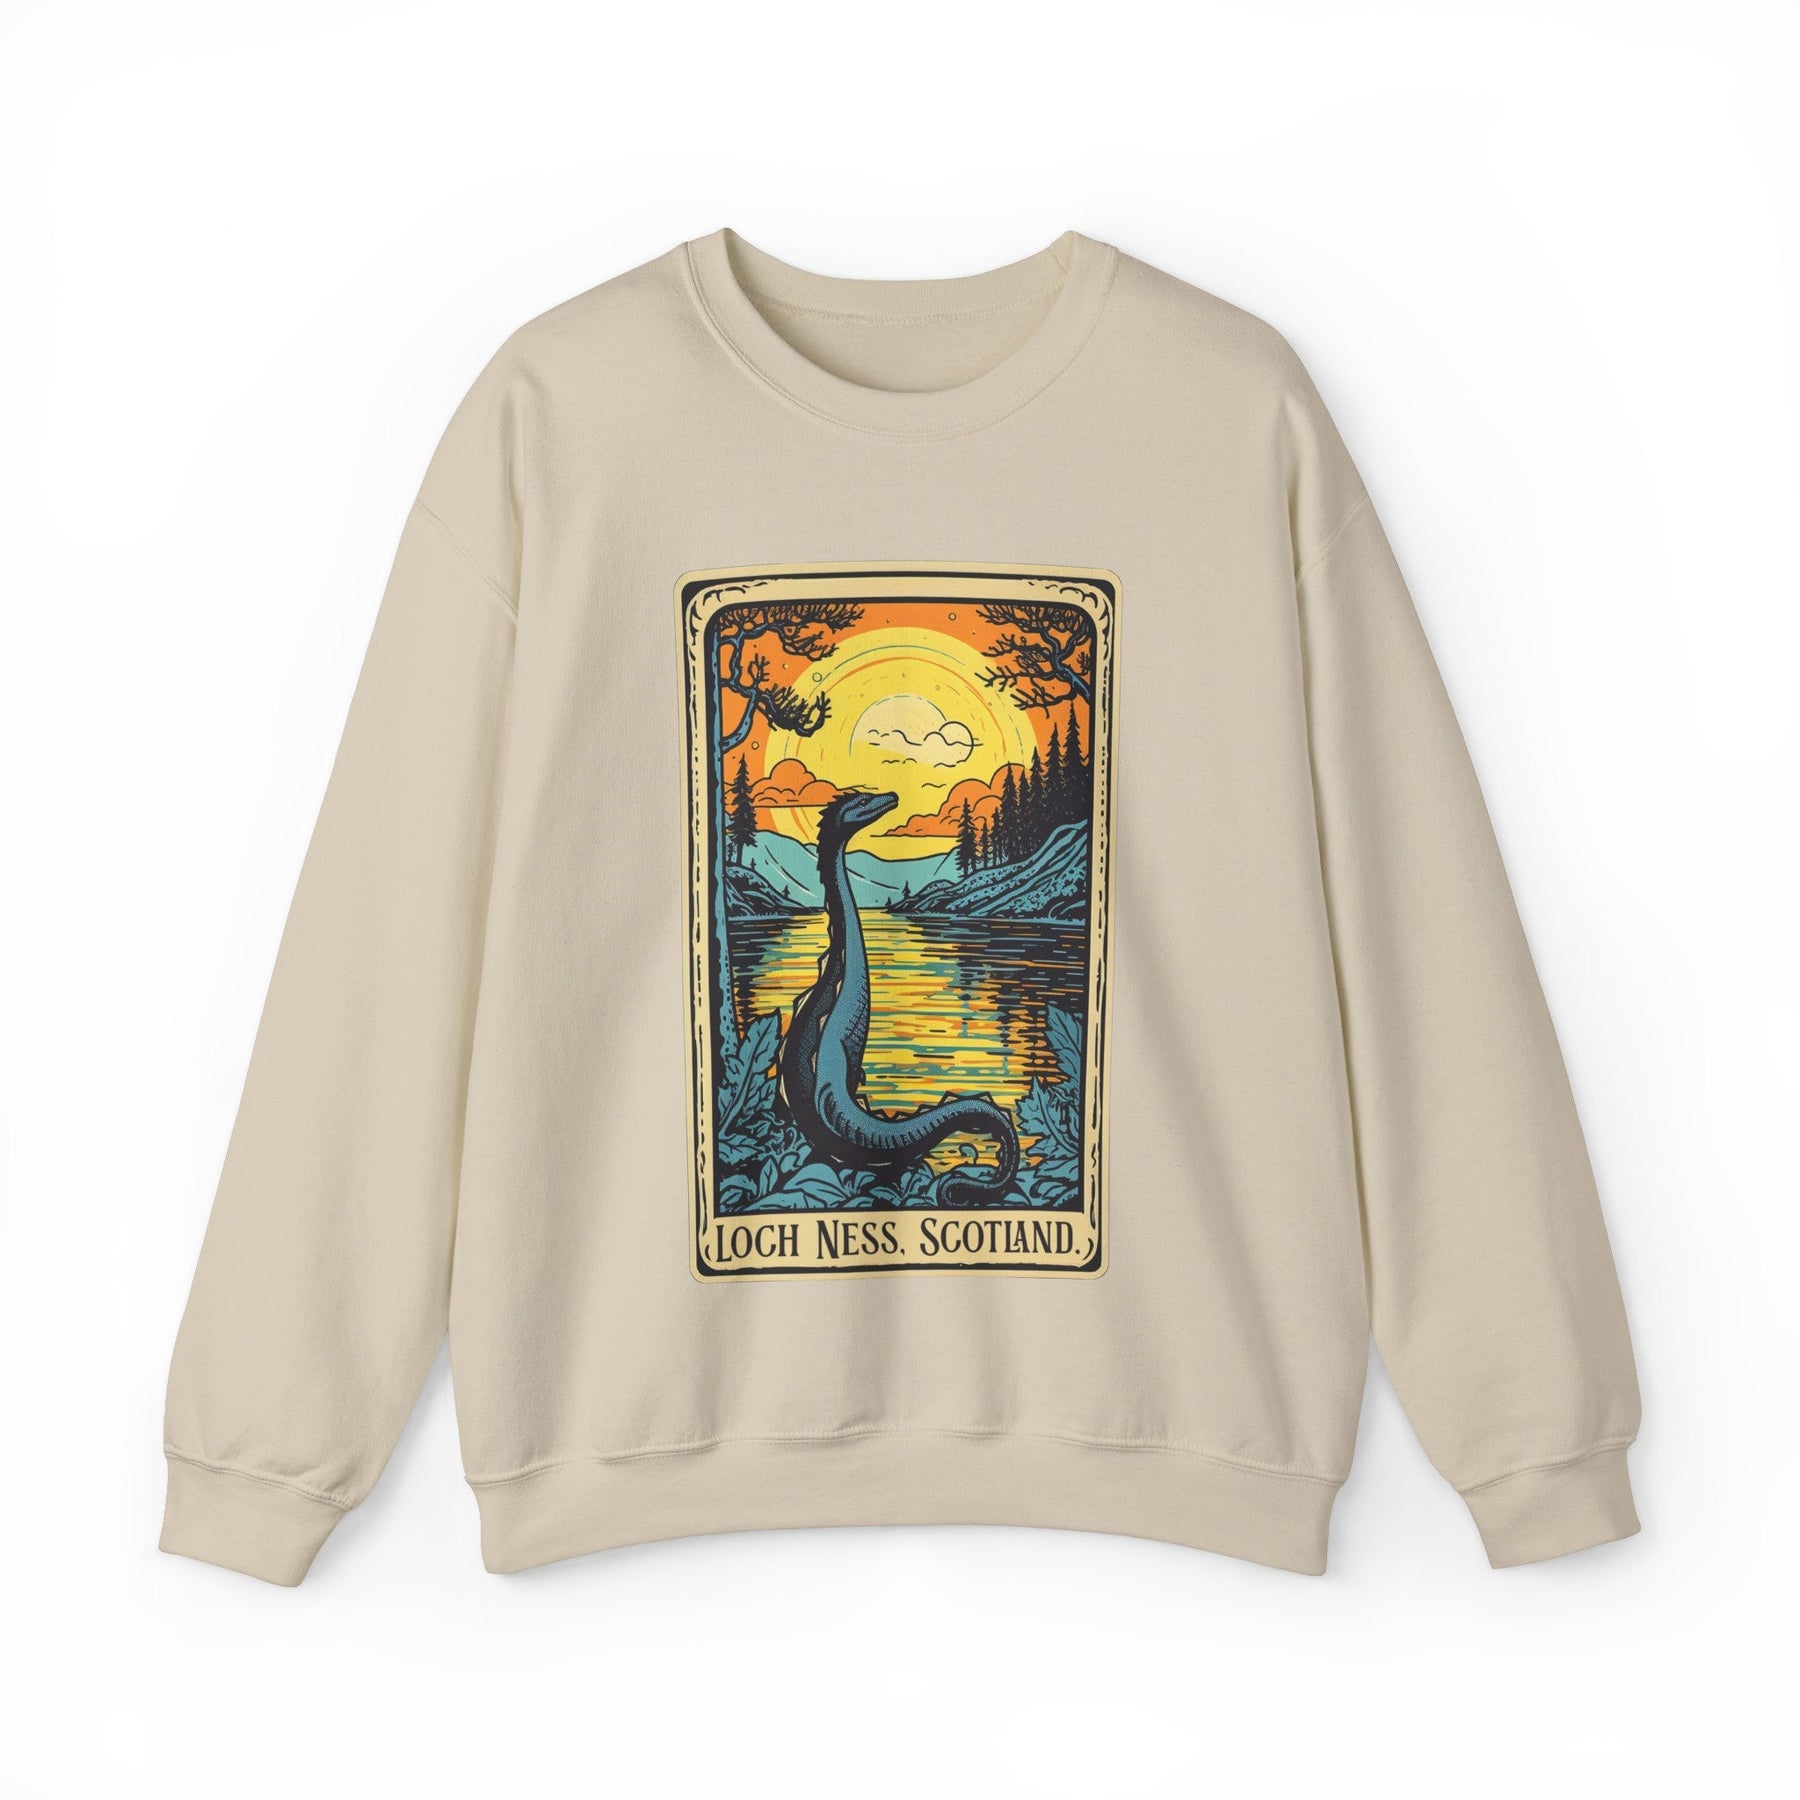 Loch Ness Monster Tarot Crew Neck Sweatshirt - Goth Cloth Co.Sweatshirt60945772310679534407